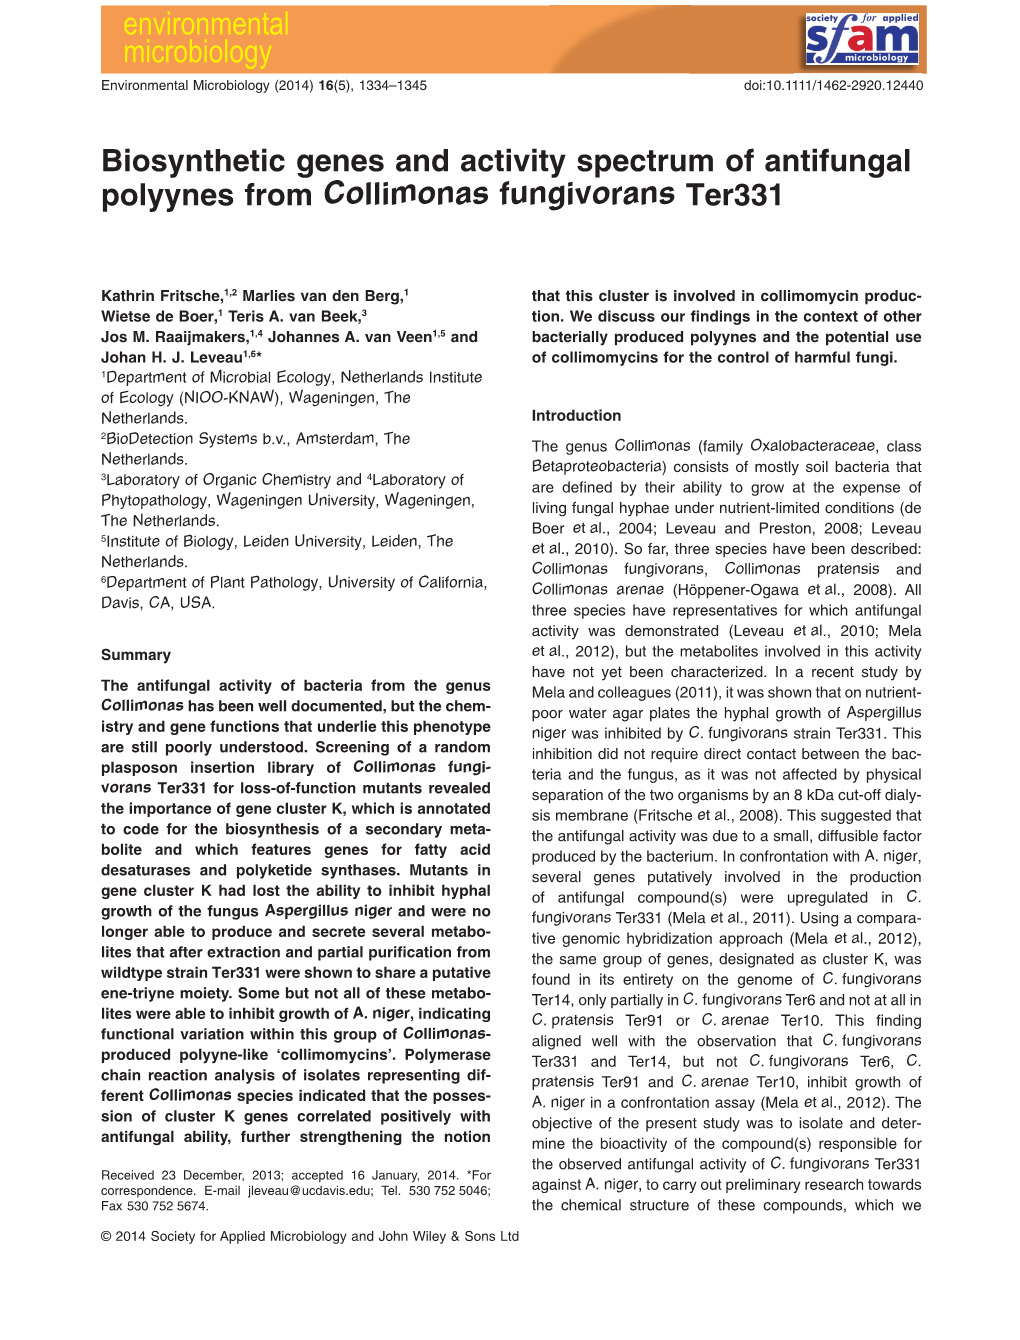 Biosynthetic Genes and Activity Spectrum of Antifungal Polyynes from Collimonas Fungivoranster331